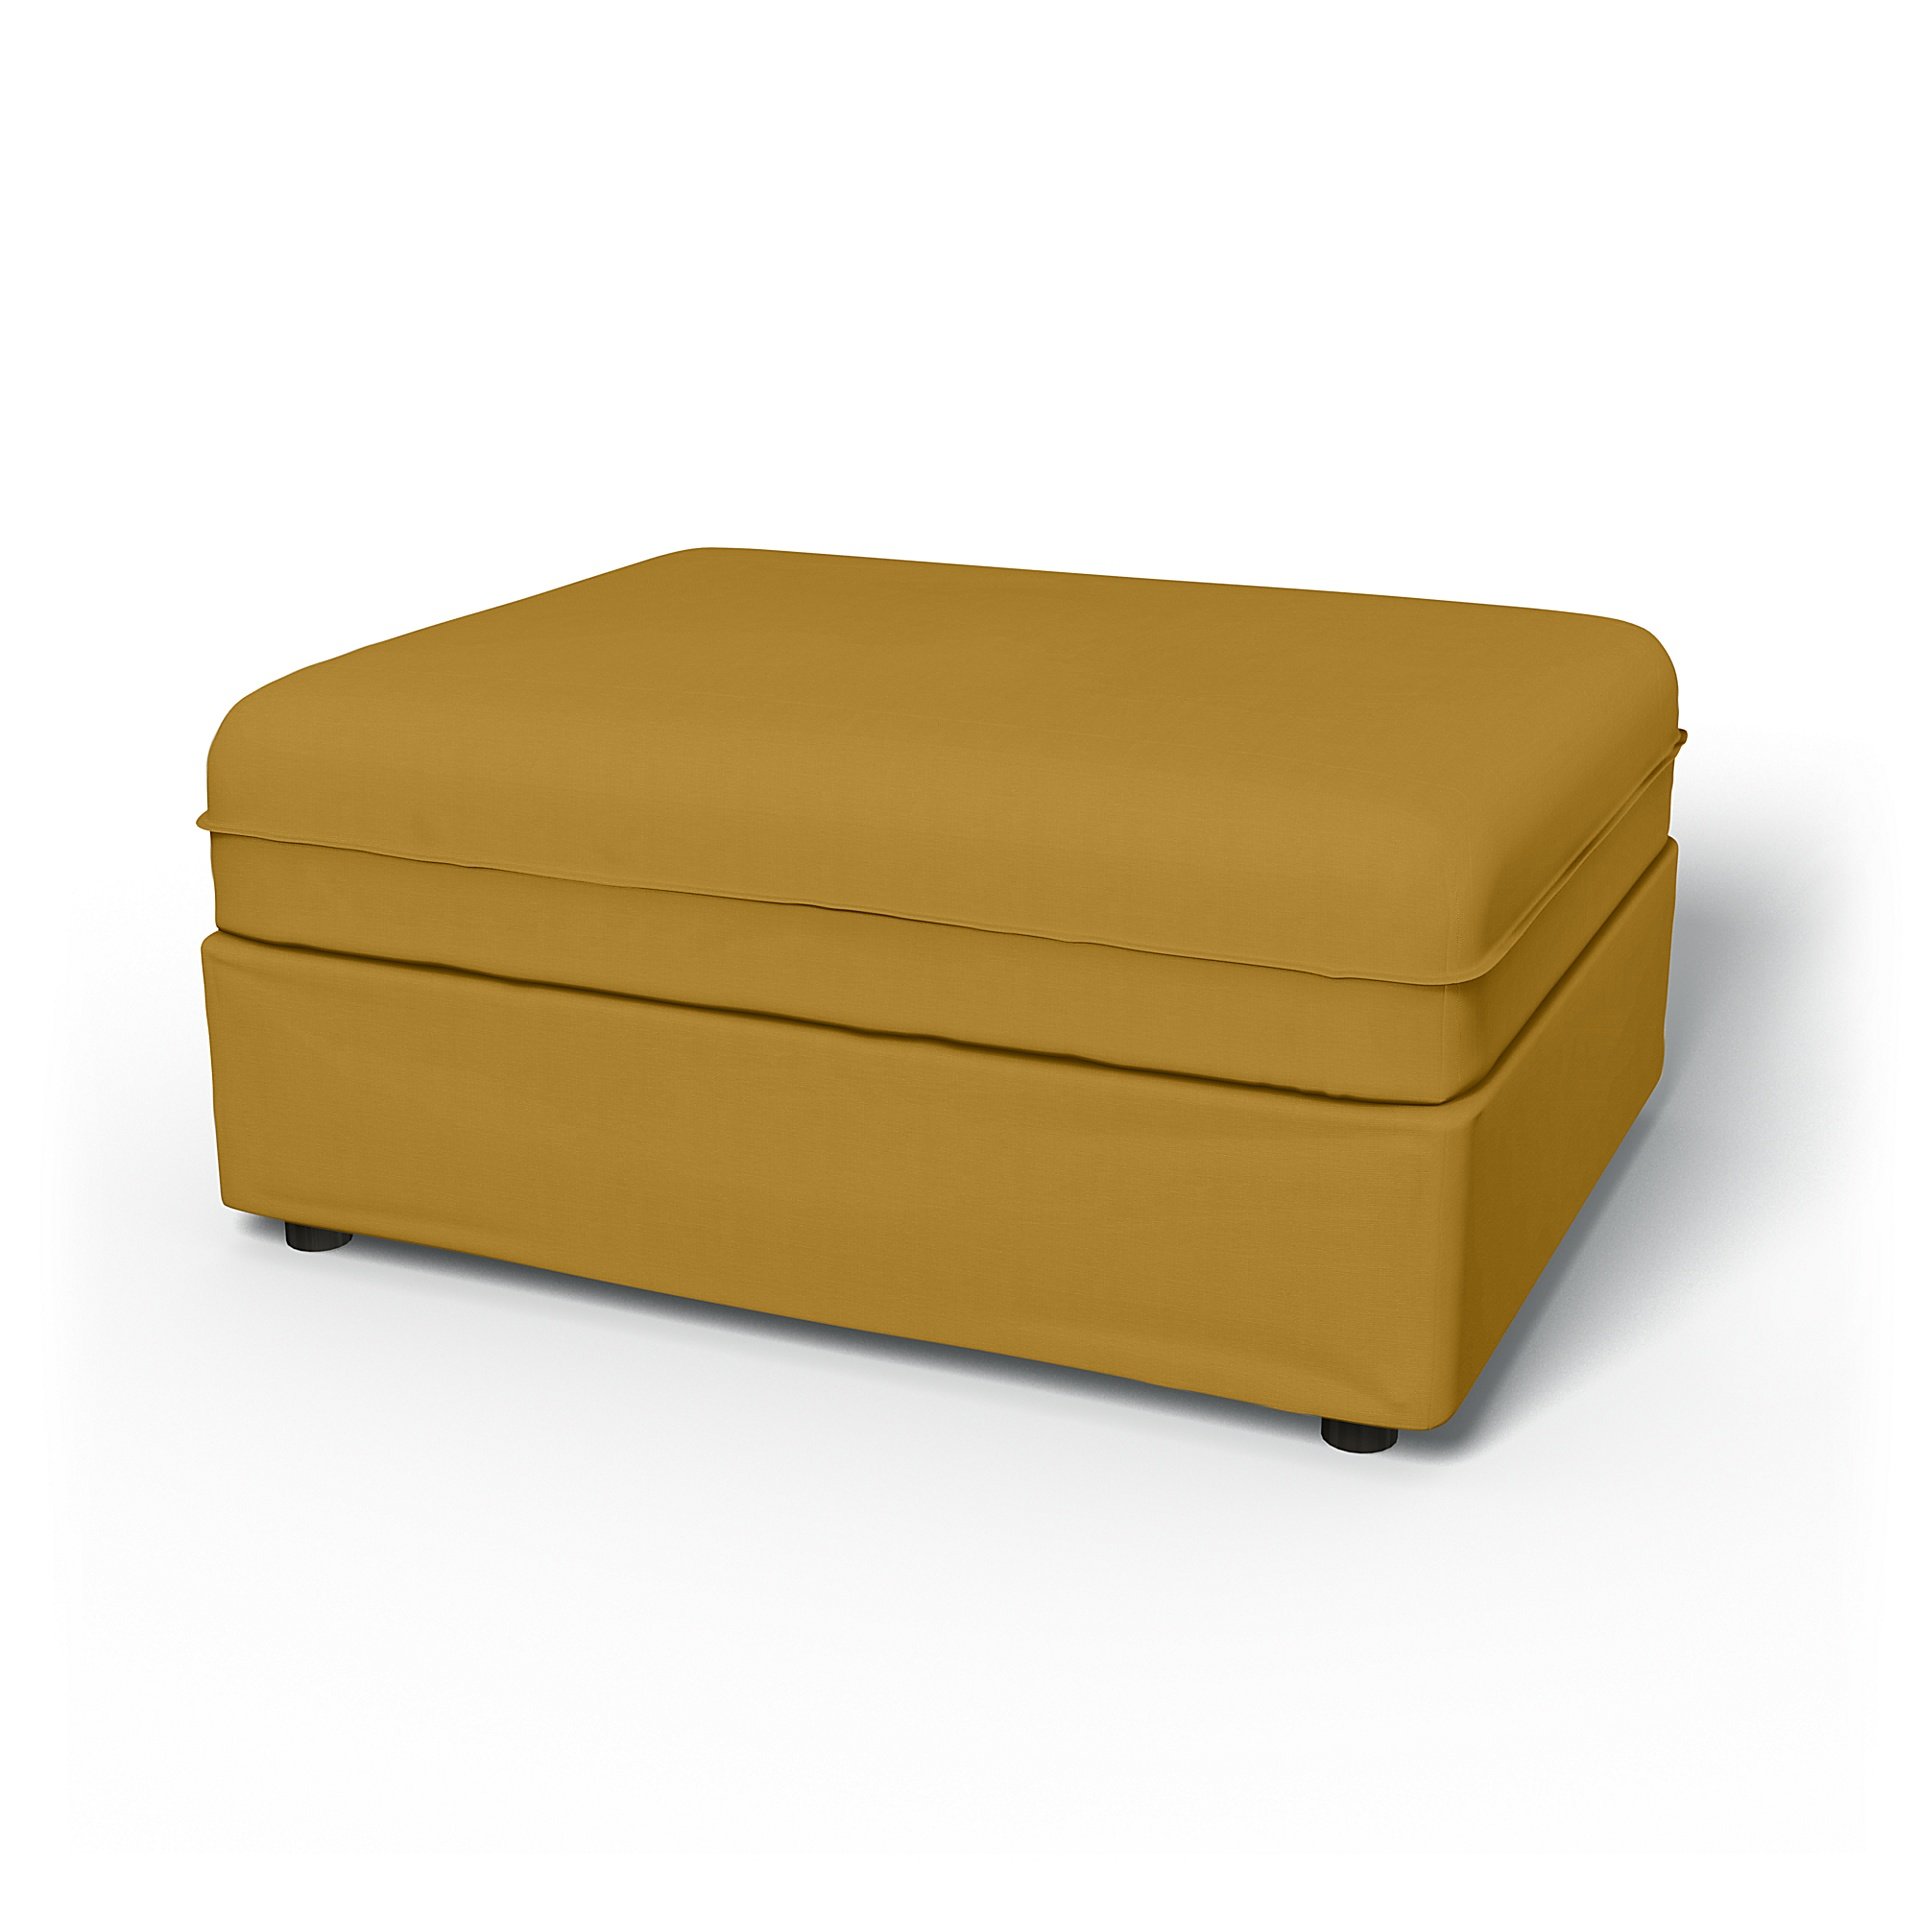 IKEA - Vallentuna Seat Module Cover 100x80cm 39x32in, Honey Mustard, Cotton - Bemz